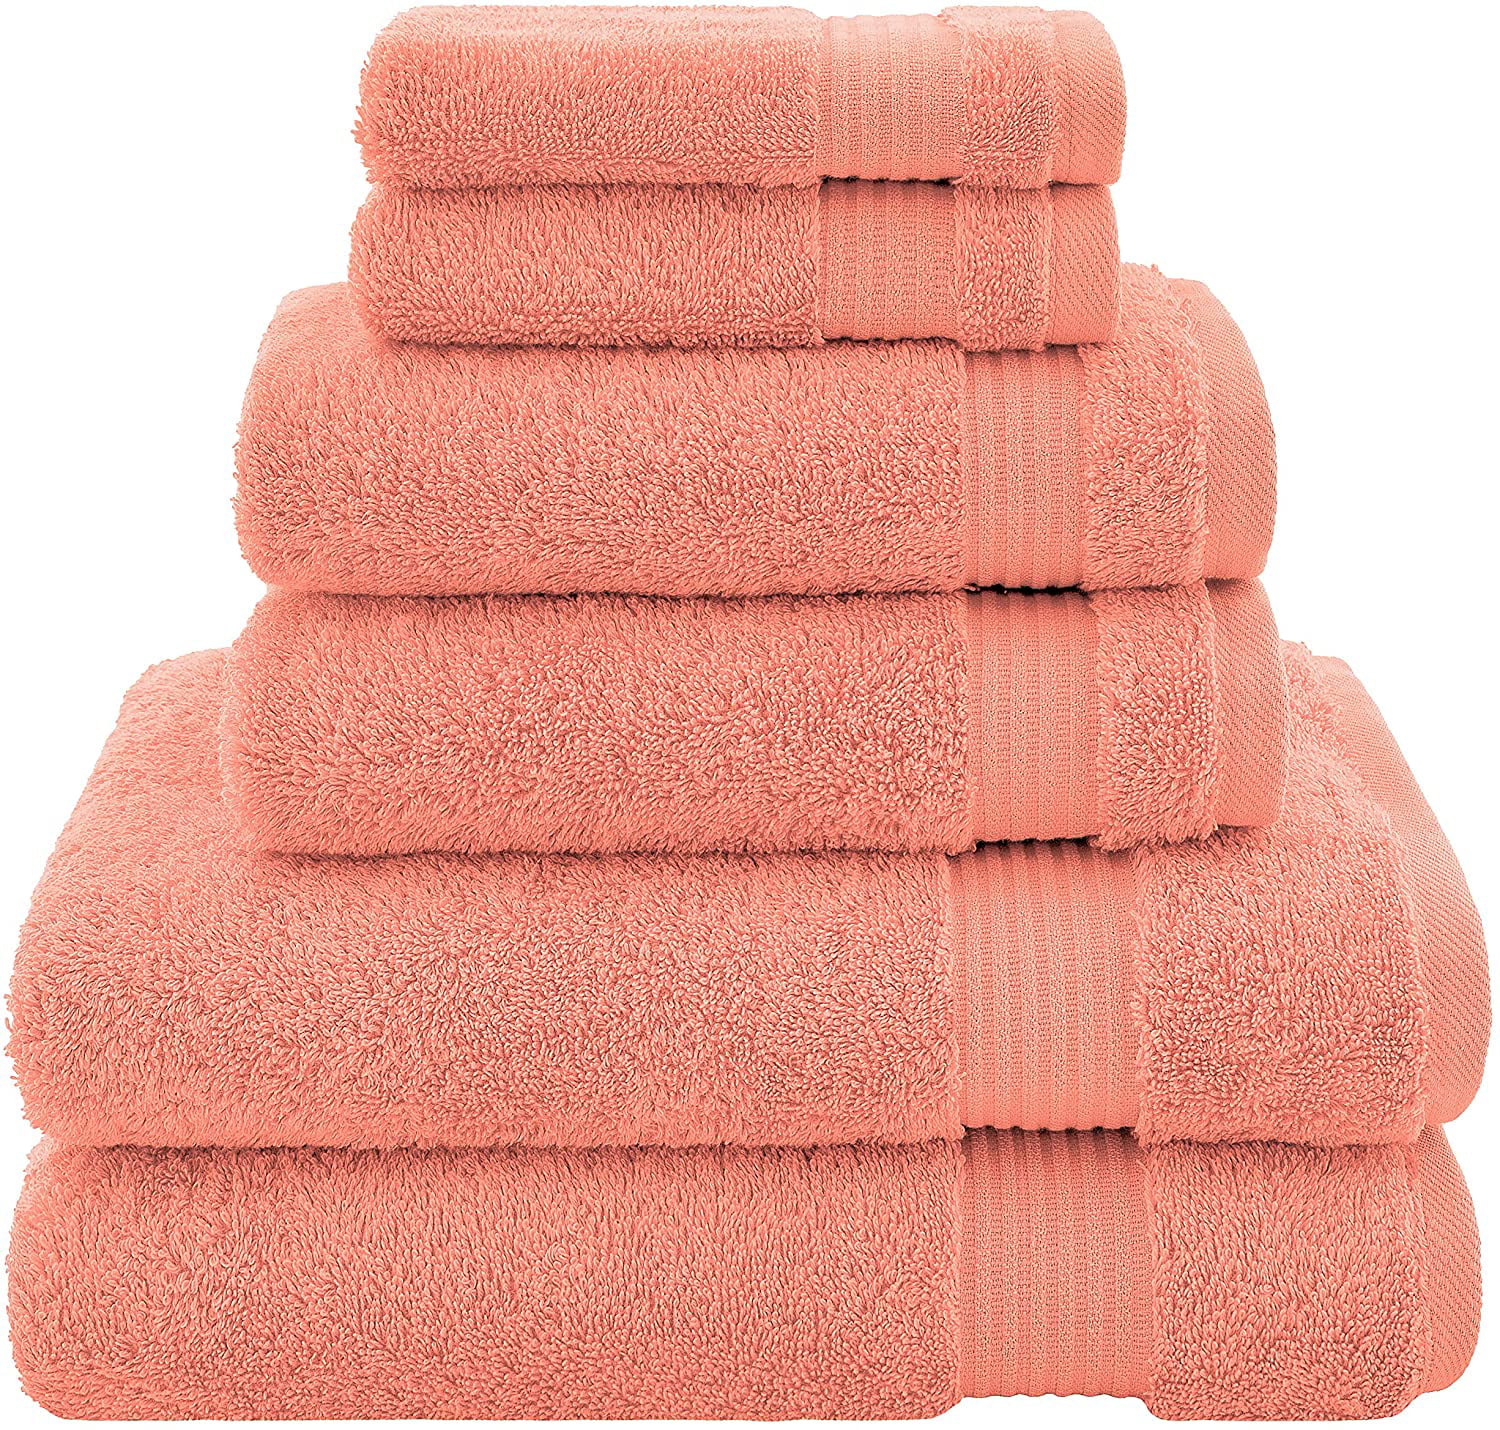 Shower Spa Soft and Absorbent 6 Piece Bath Towel Set for Bathroom 